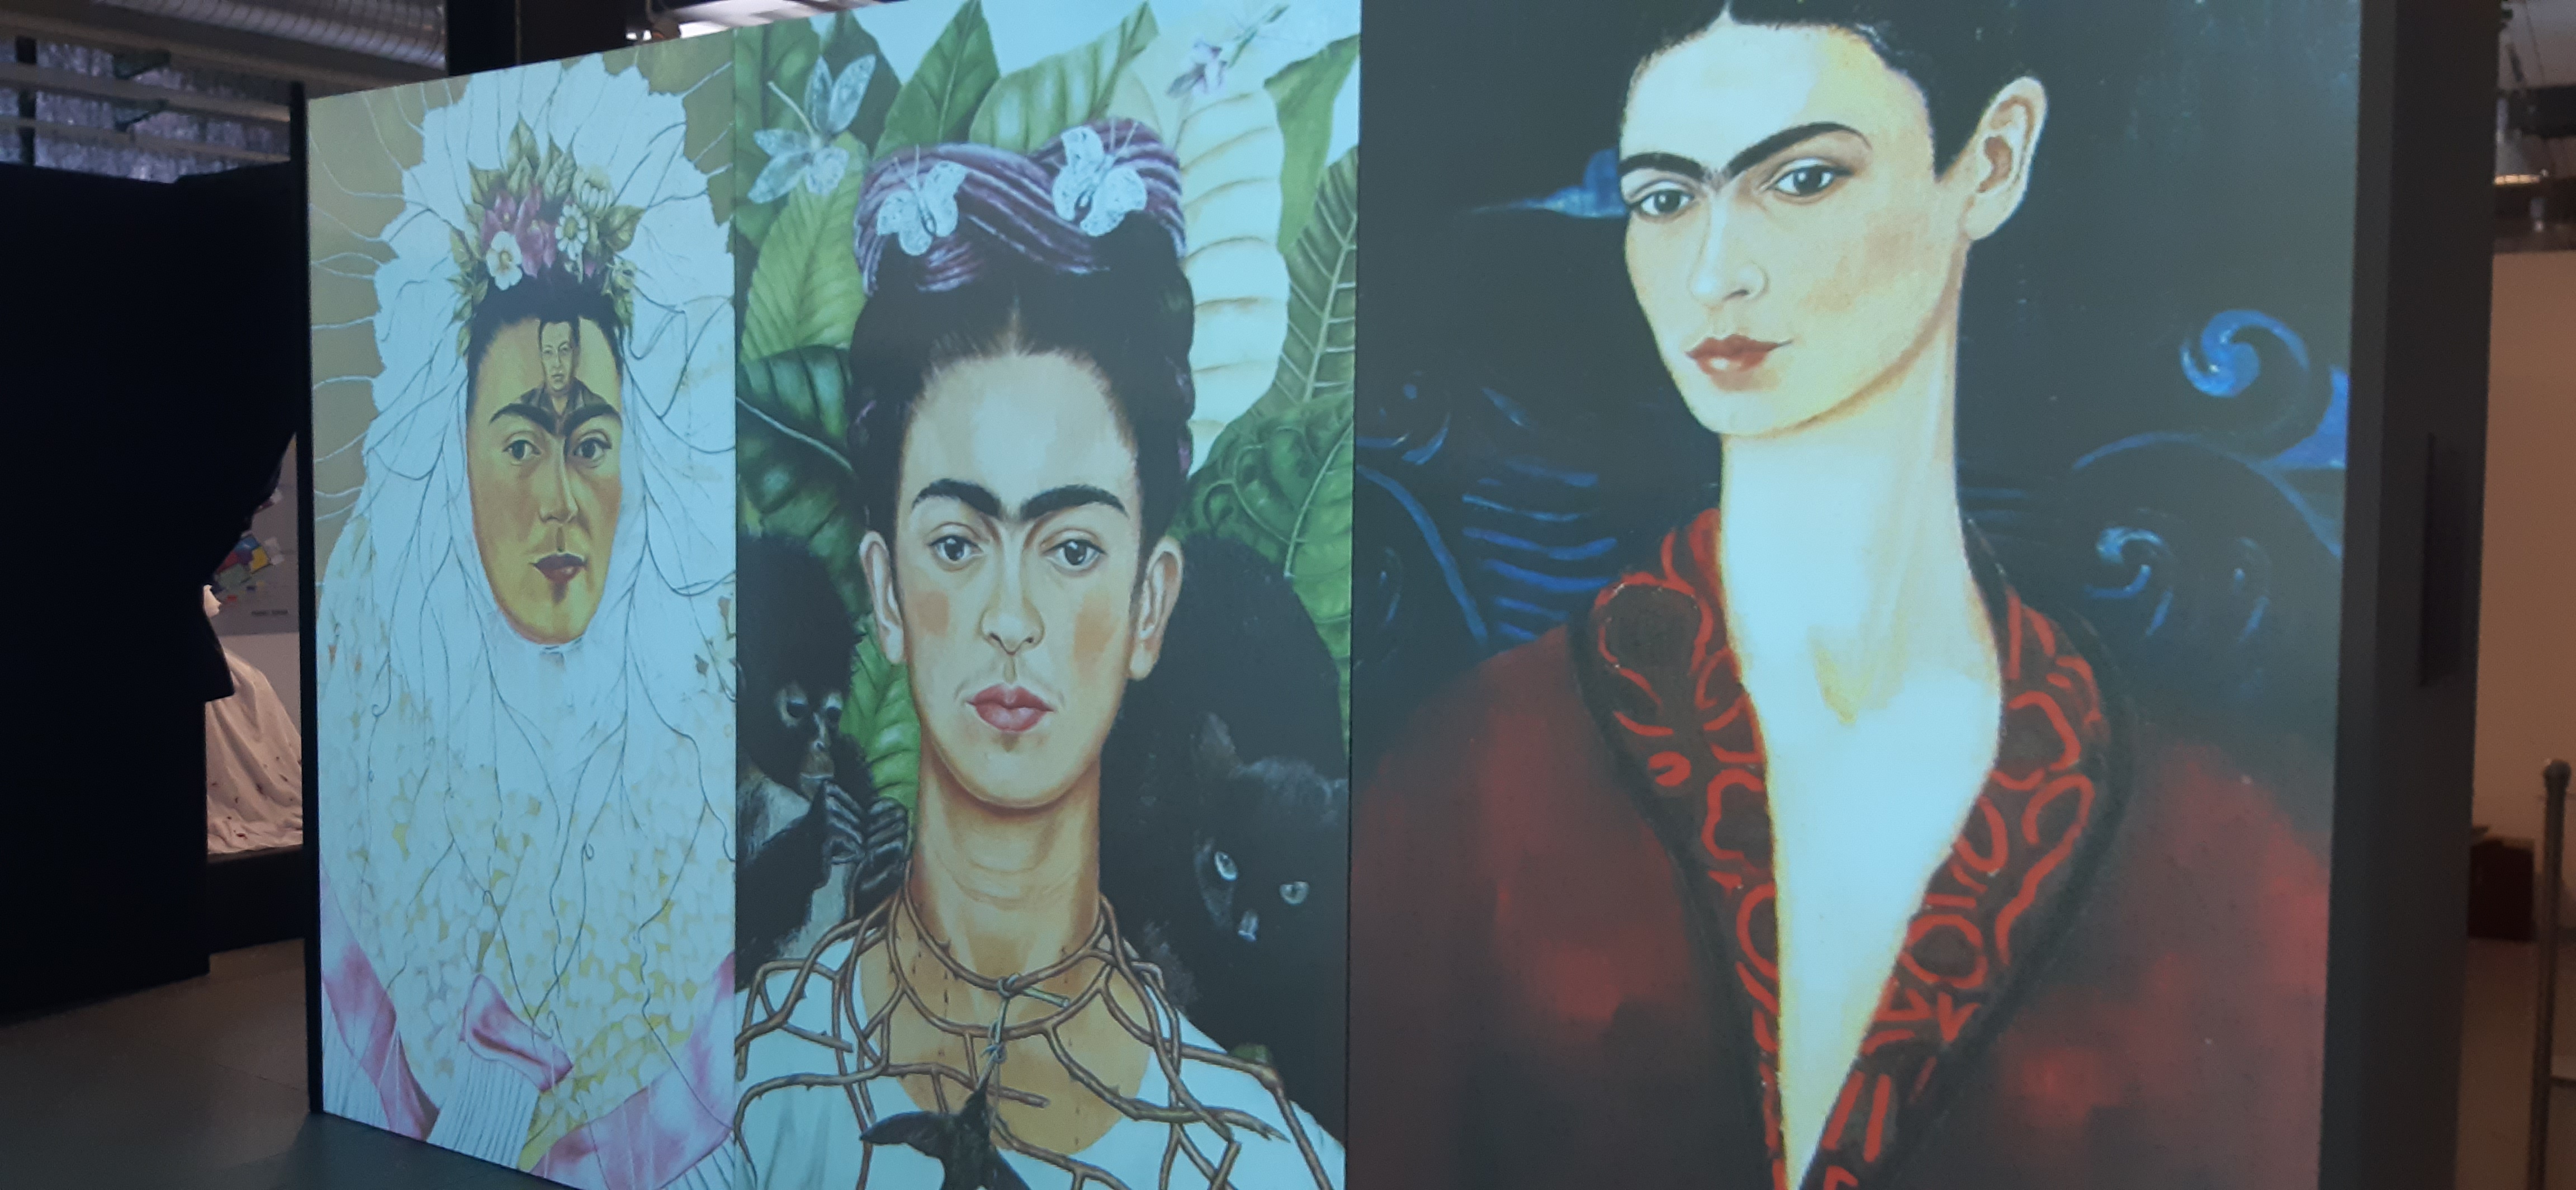 Frida Kahlo - Il Caos dentro